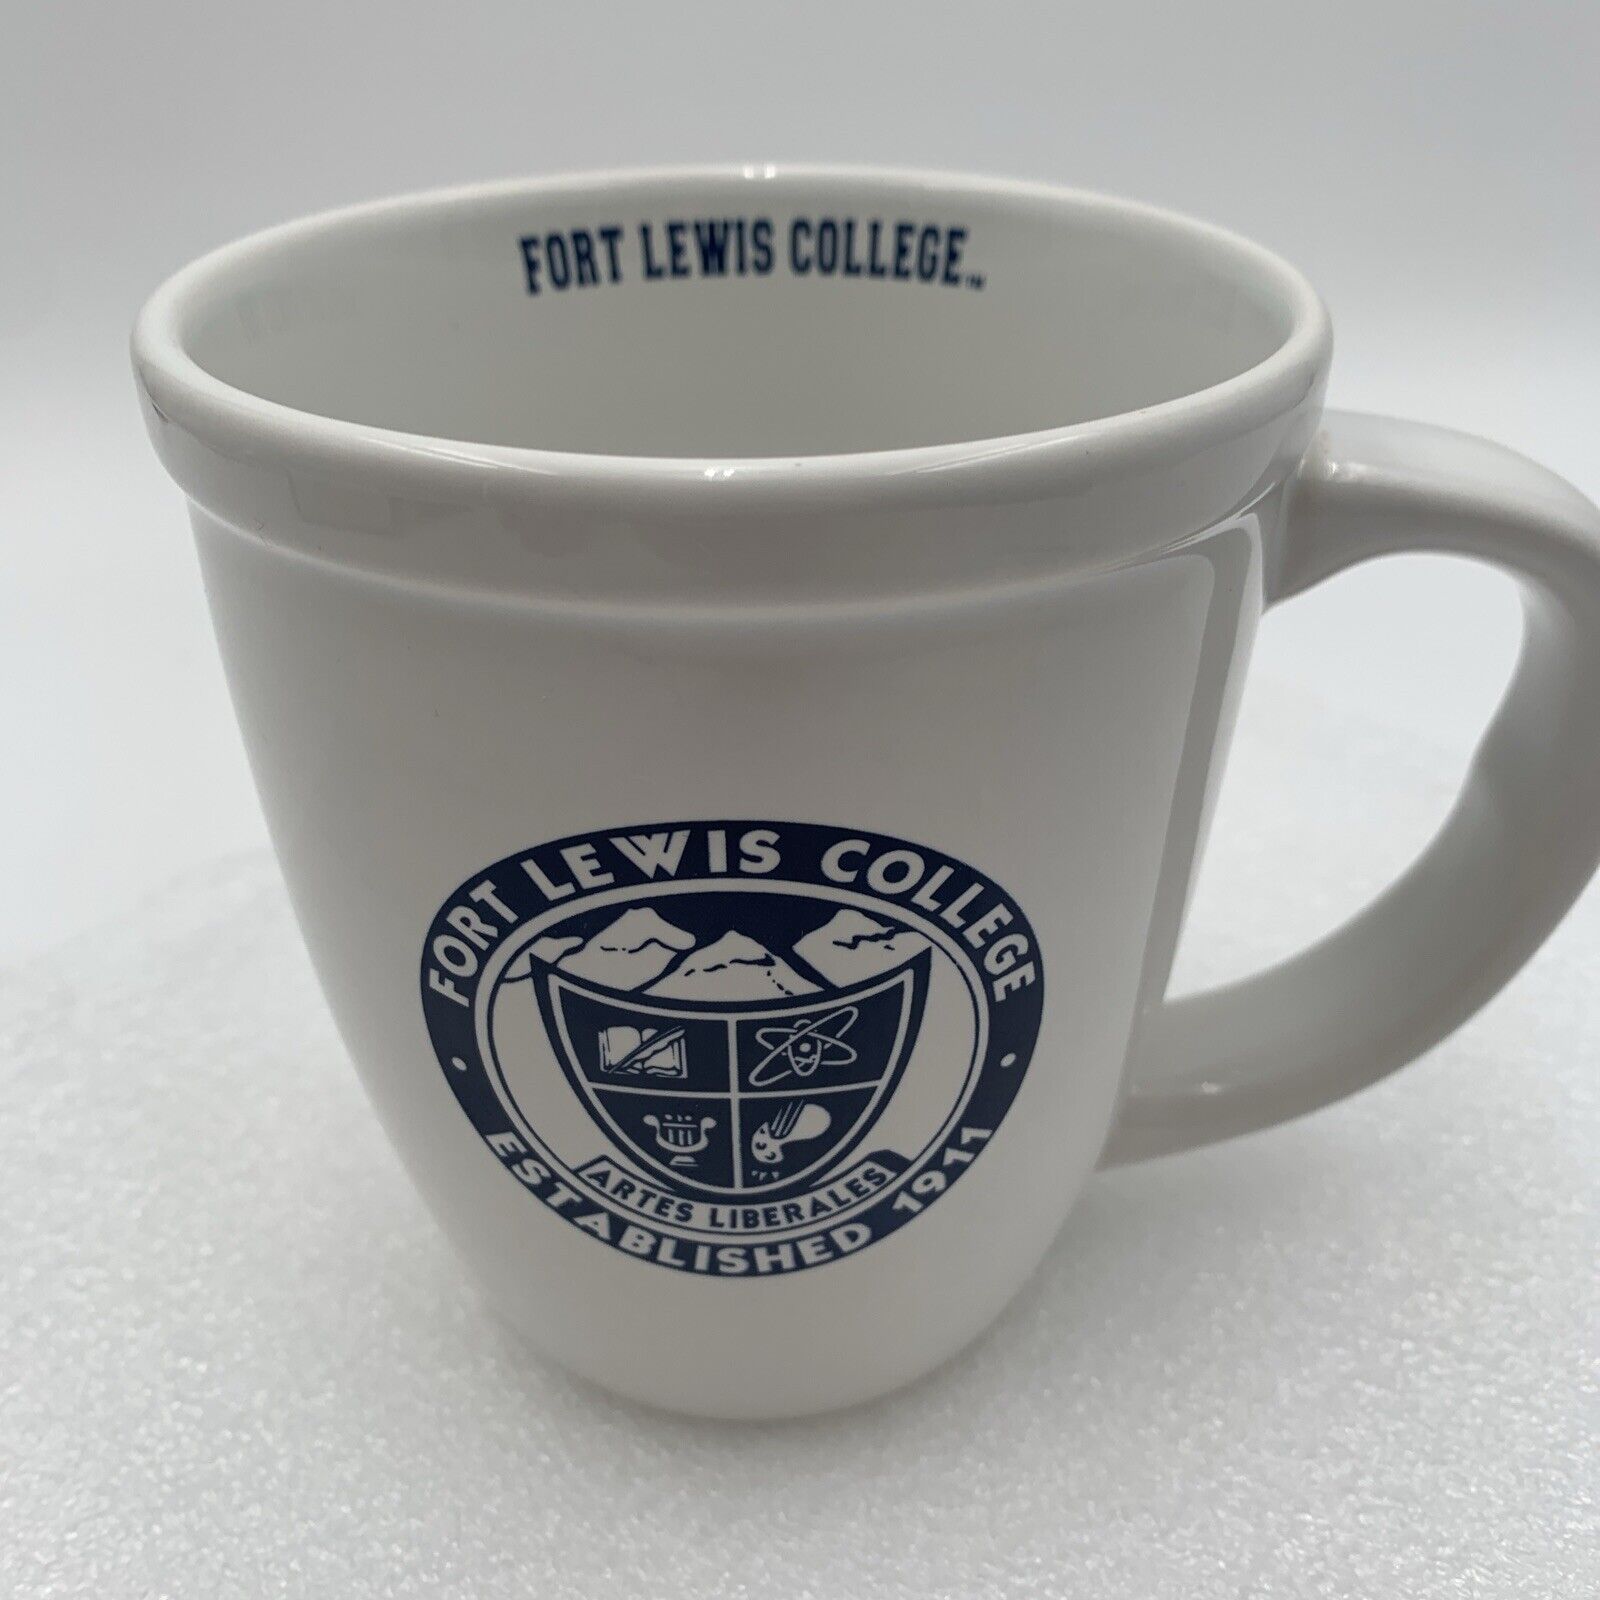 Fort Lewis College Coffee Mug 14 Oz Durango Colorado Established 1911